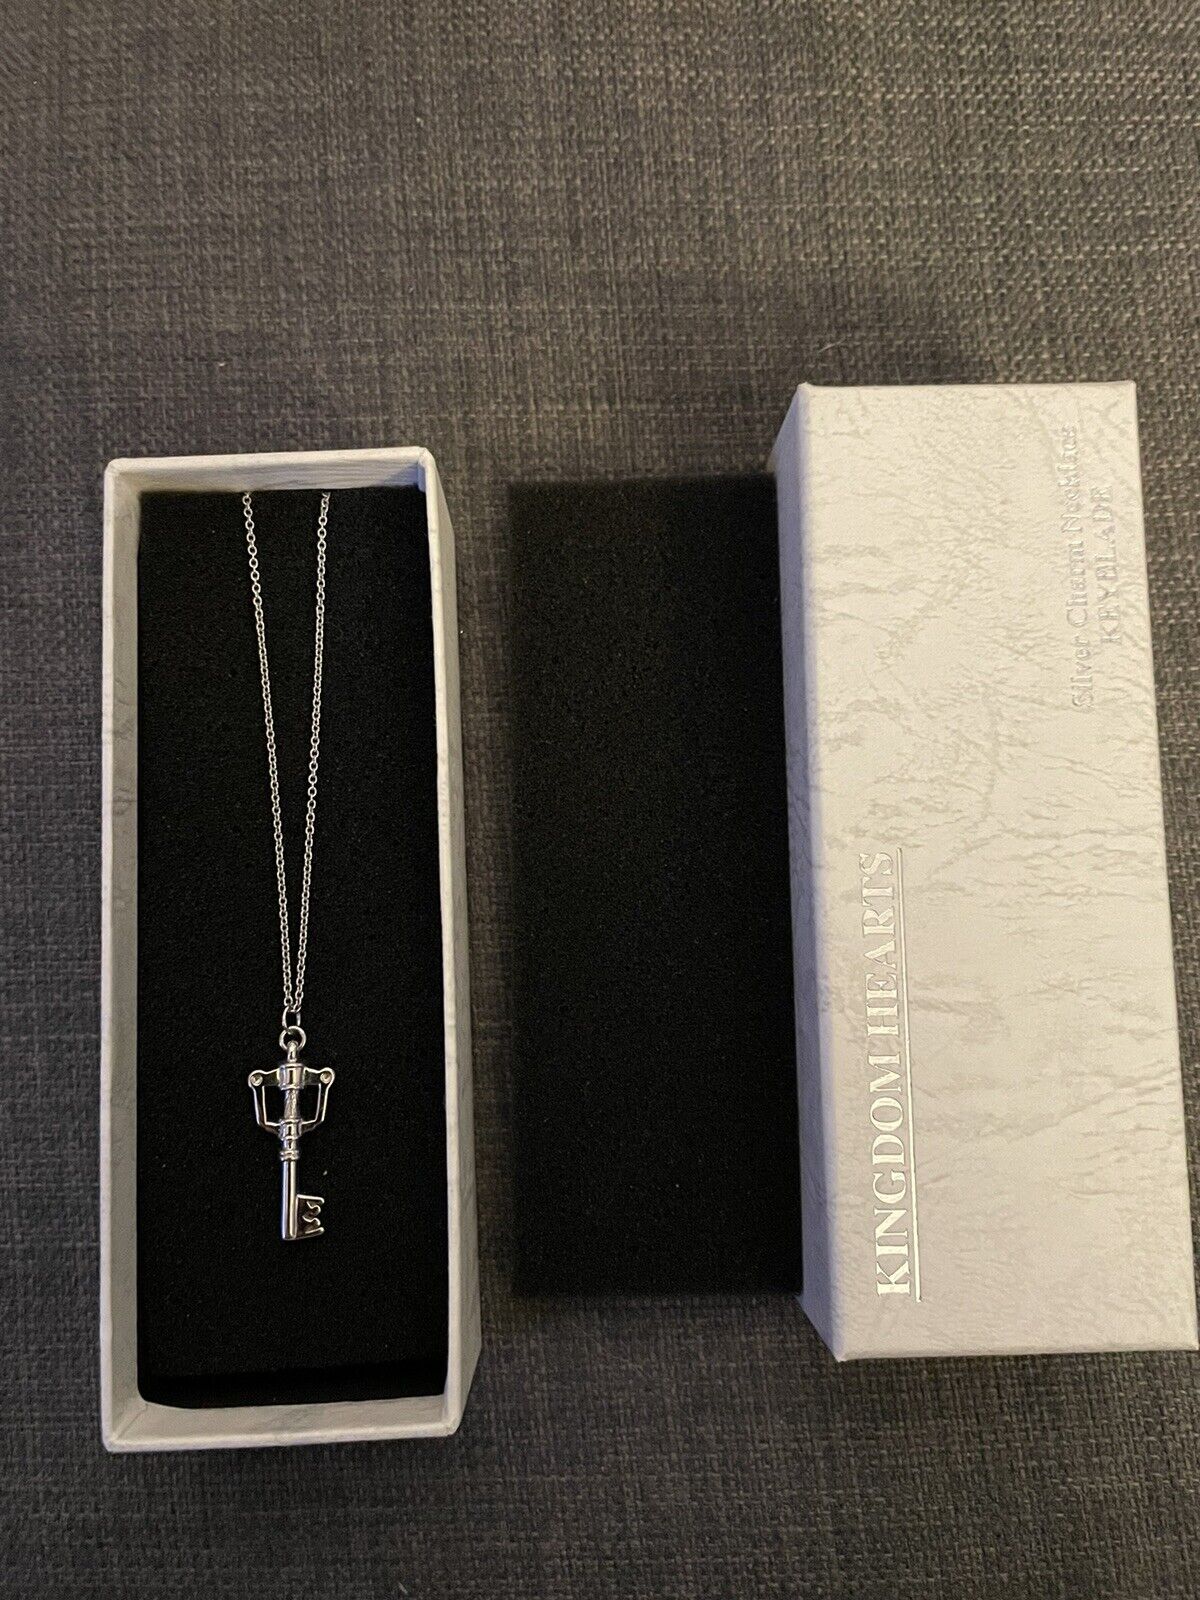 Kingdom Hearts Silver Charm Necklace Keyblade Square Enix Sterling Sliver